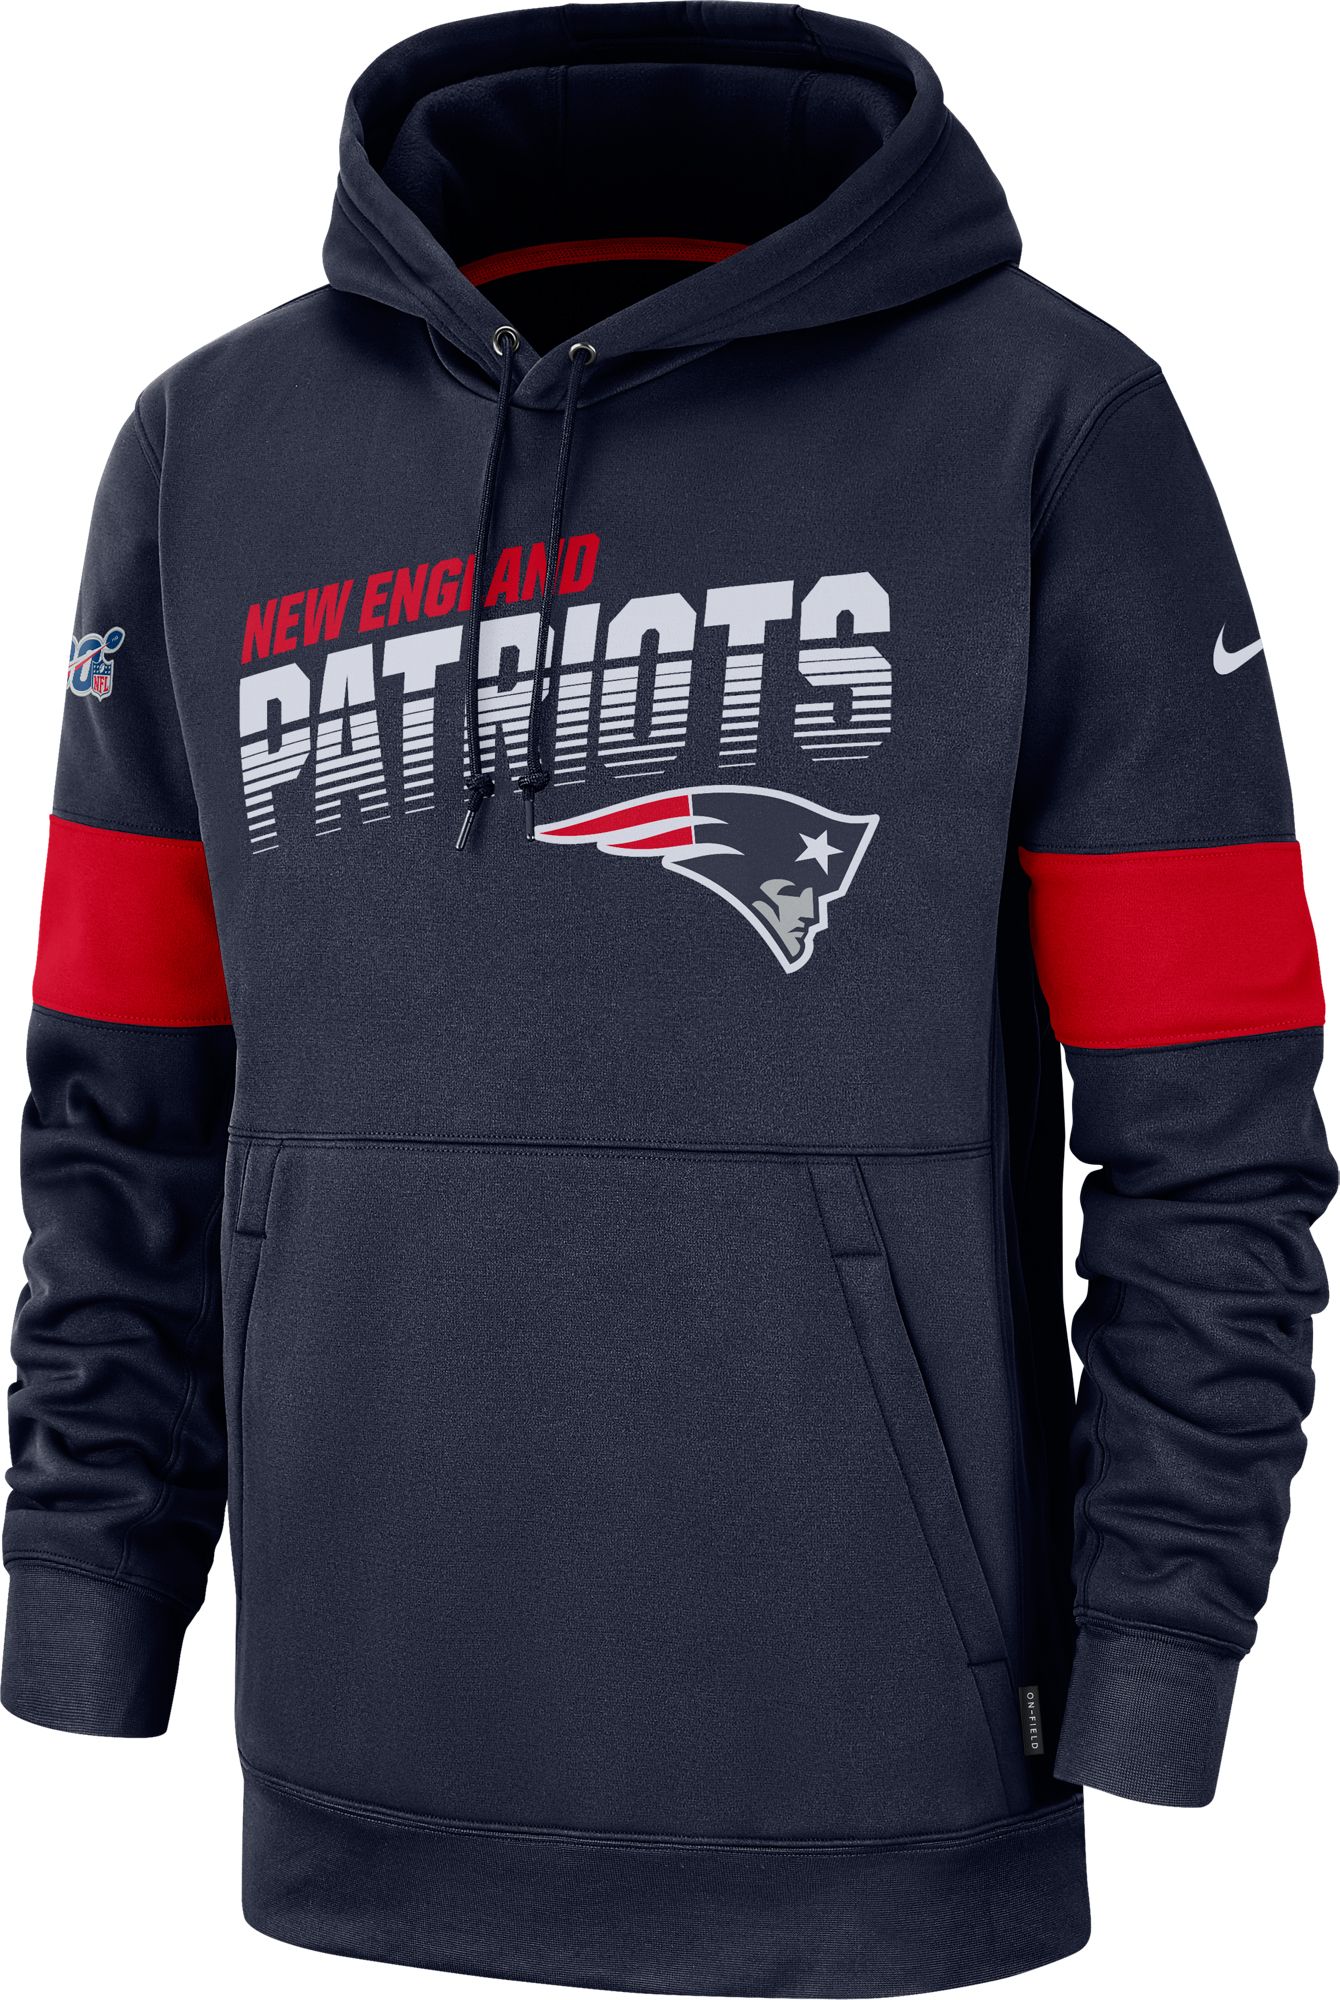 New England Patriots Hoodies | Best Price Guarantee at DICK'S